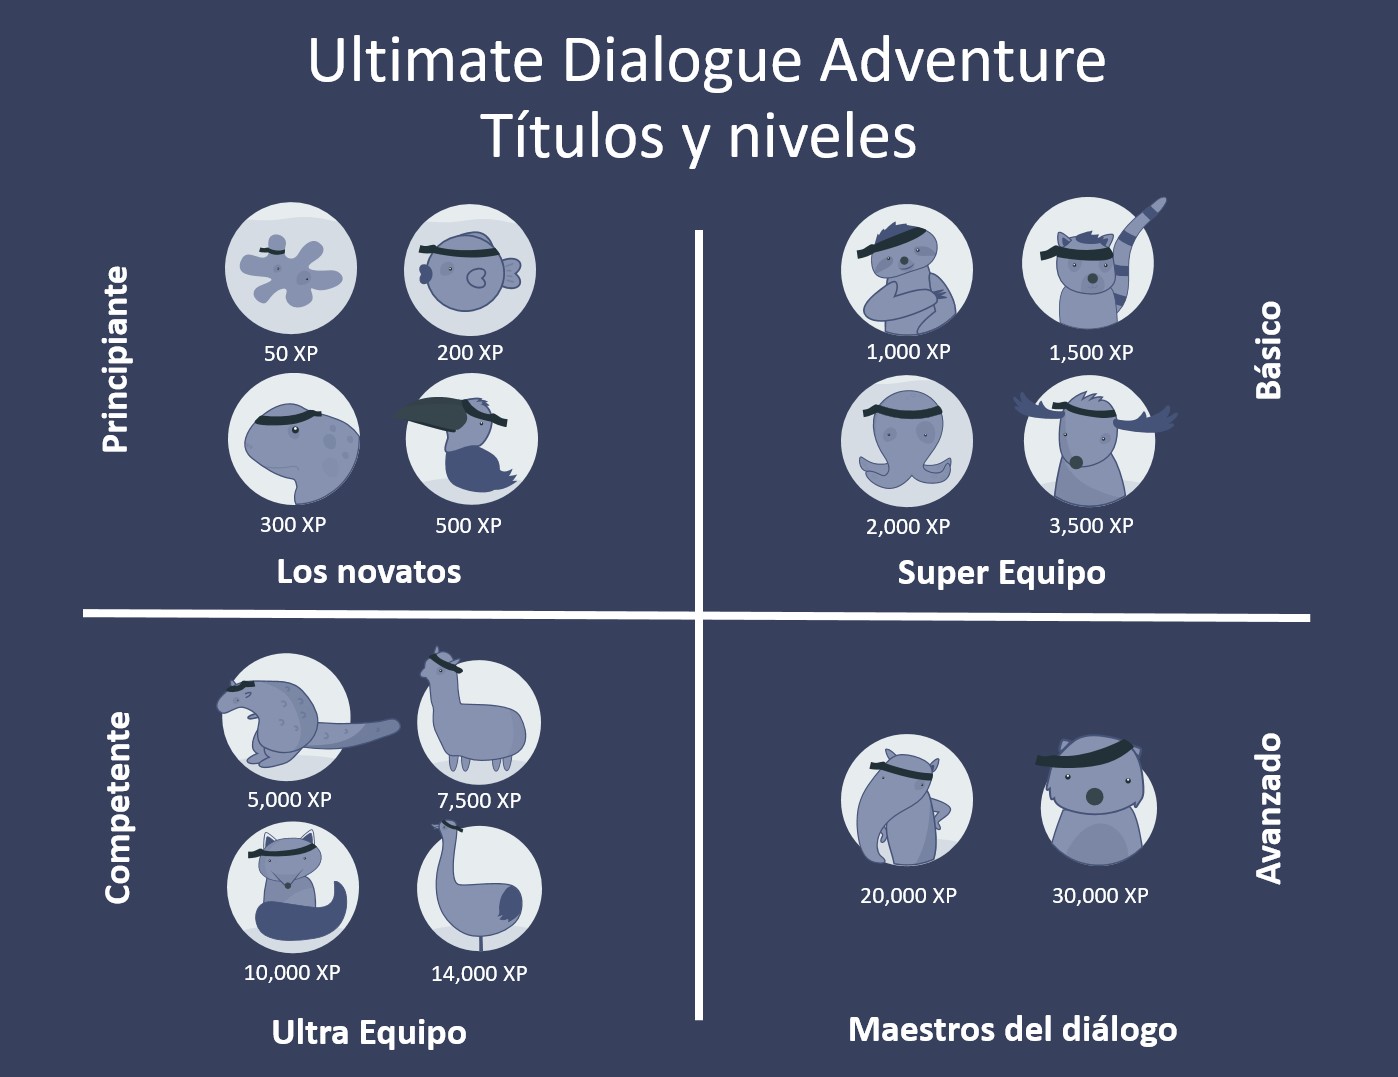 Ultimate Dialogue Adventure Squads